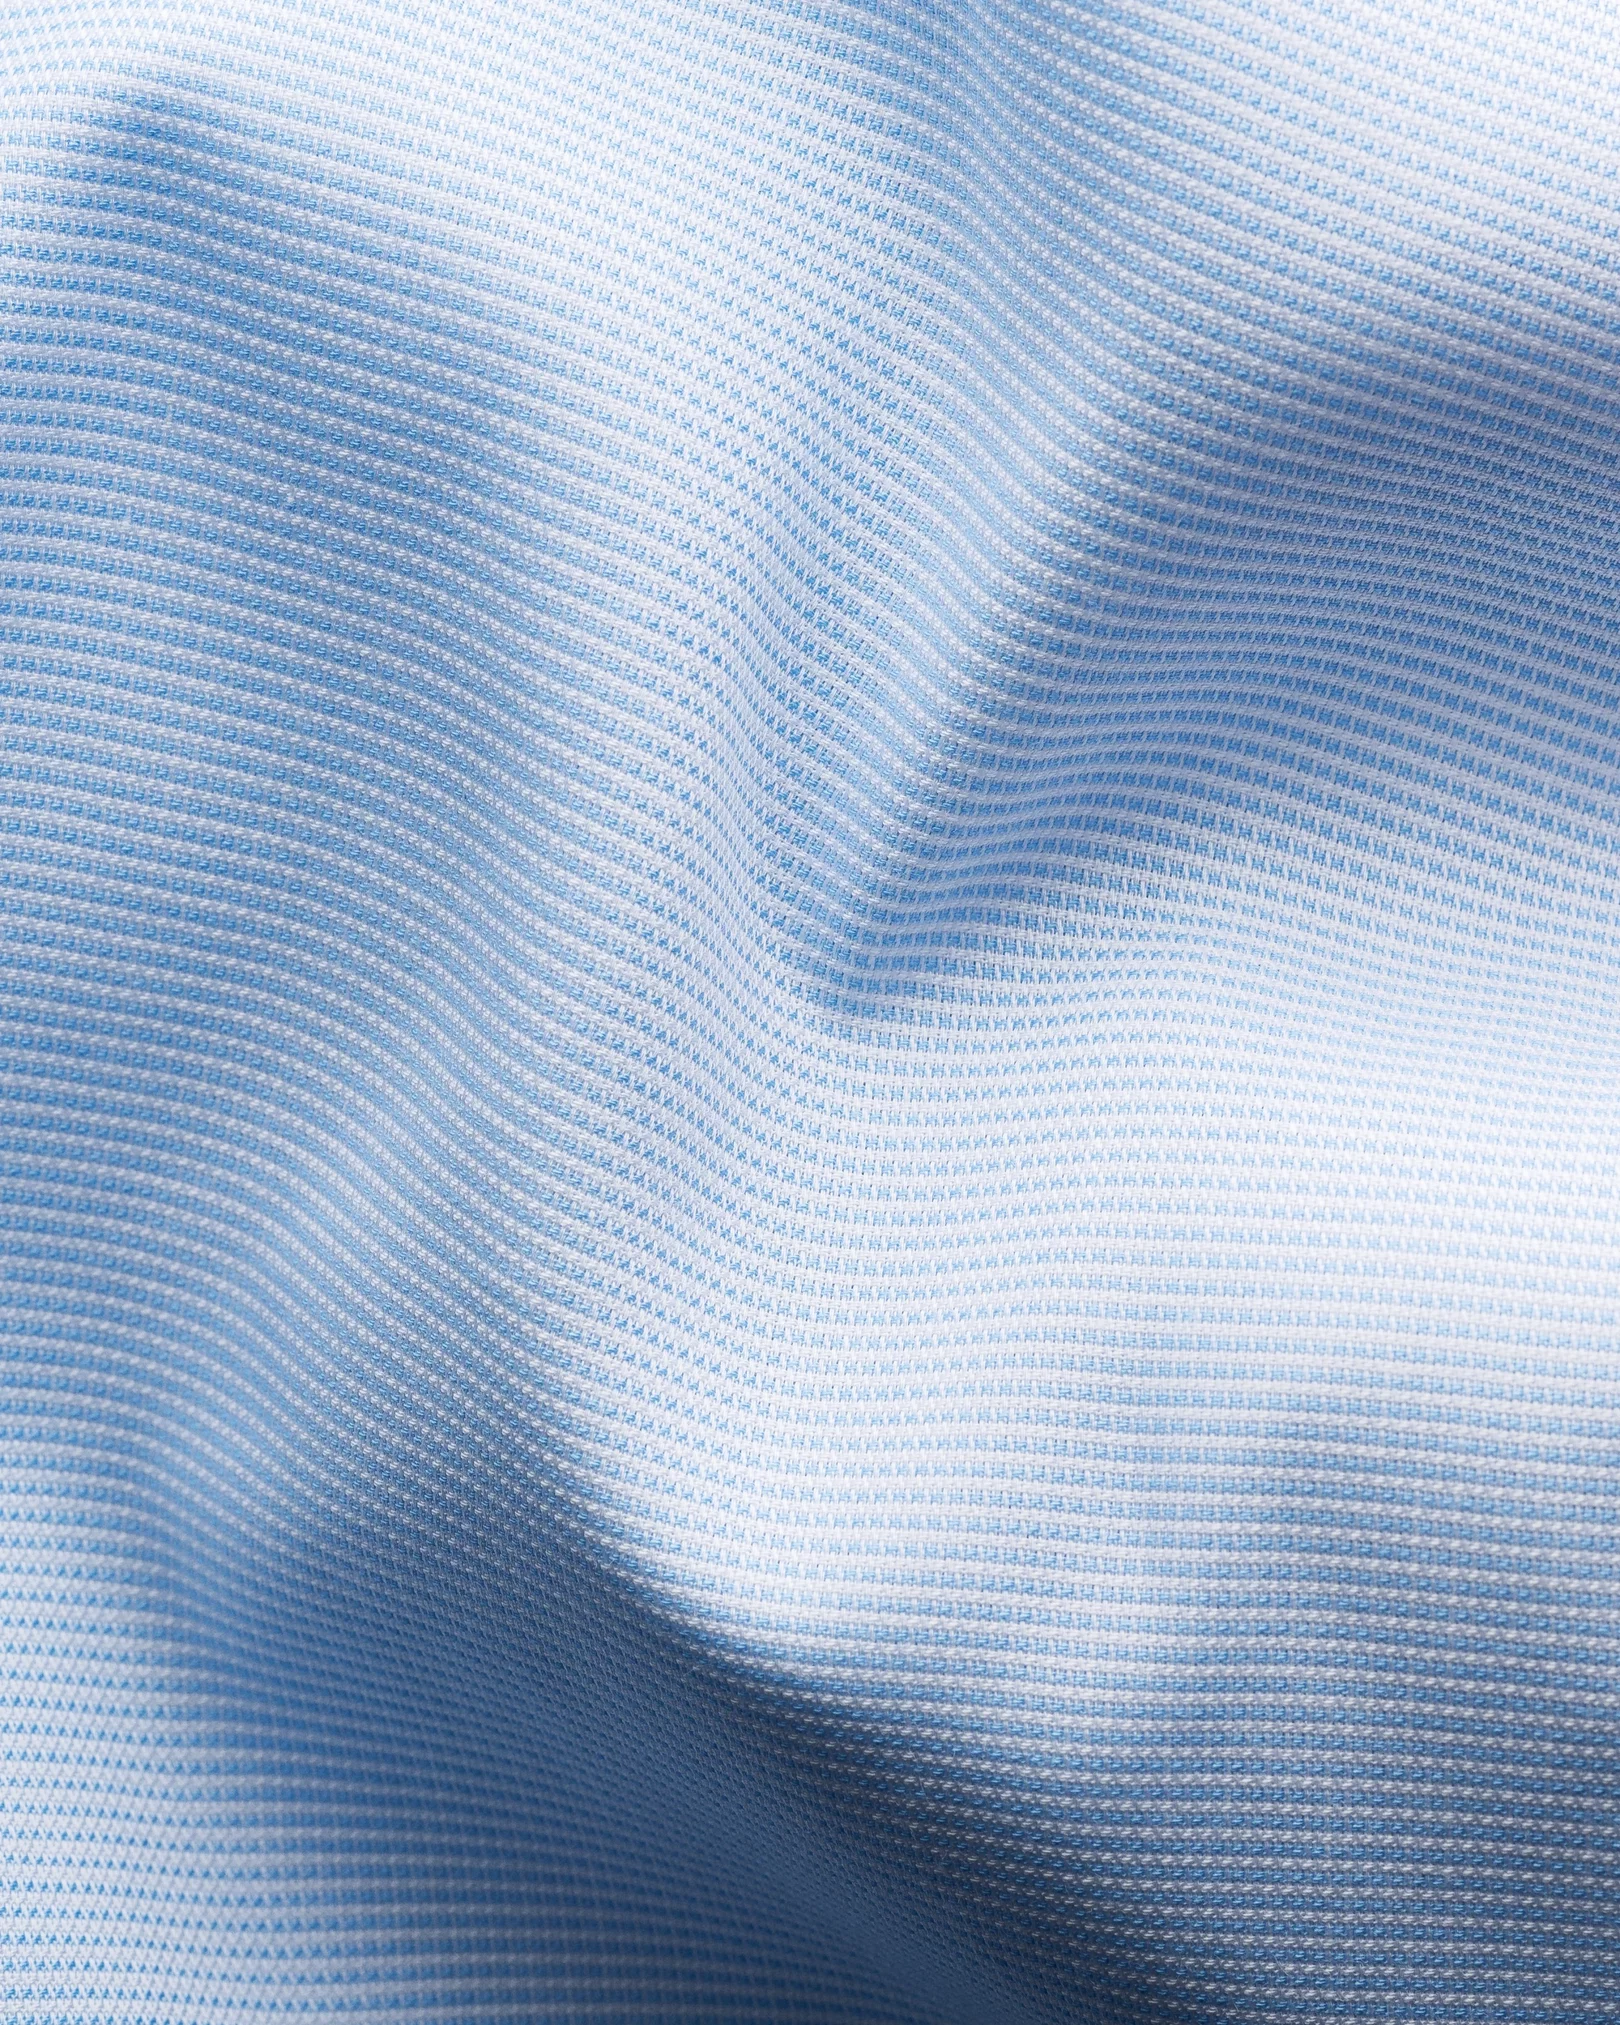 Eton - solid light blue ponited shirt